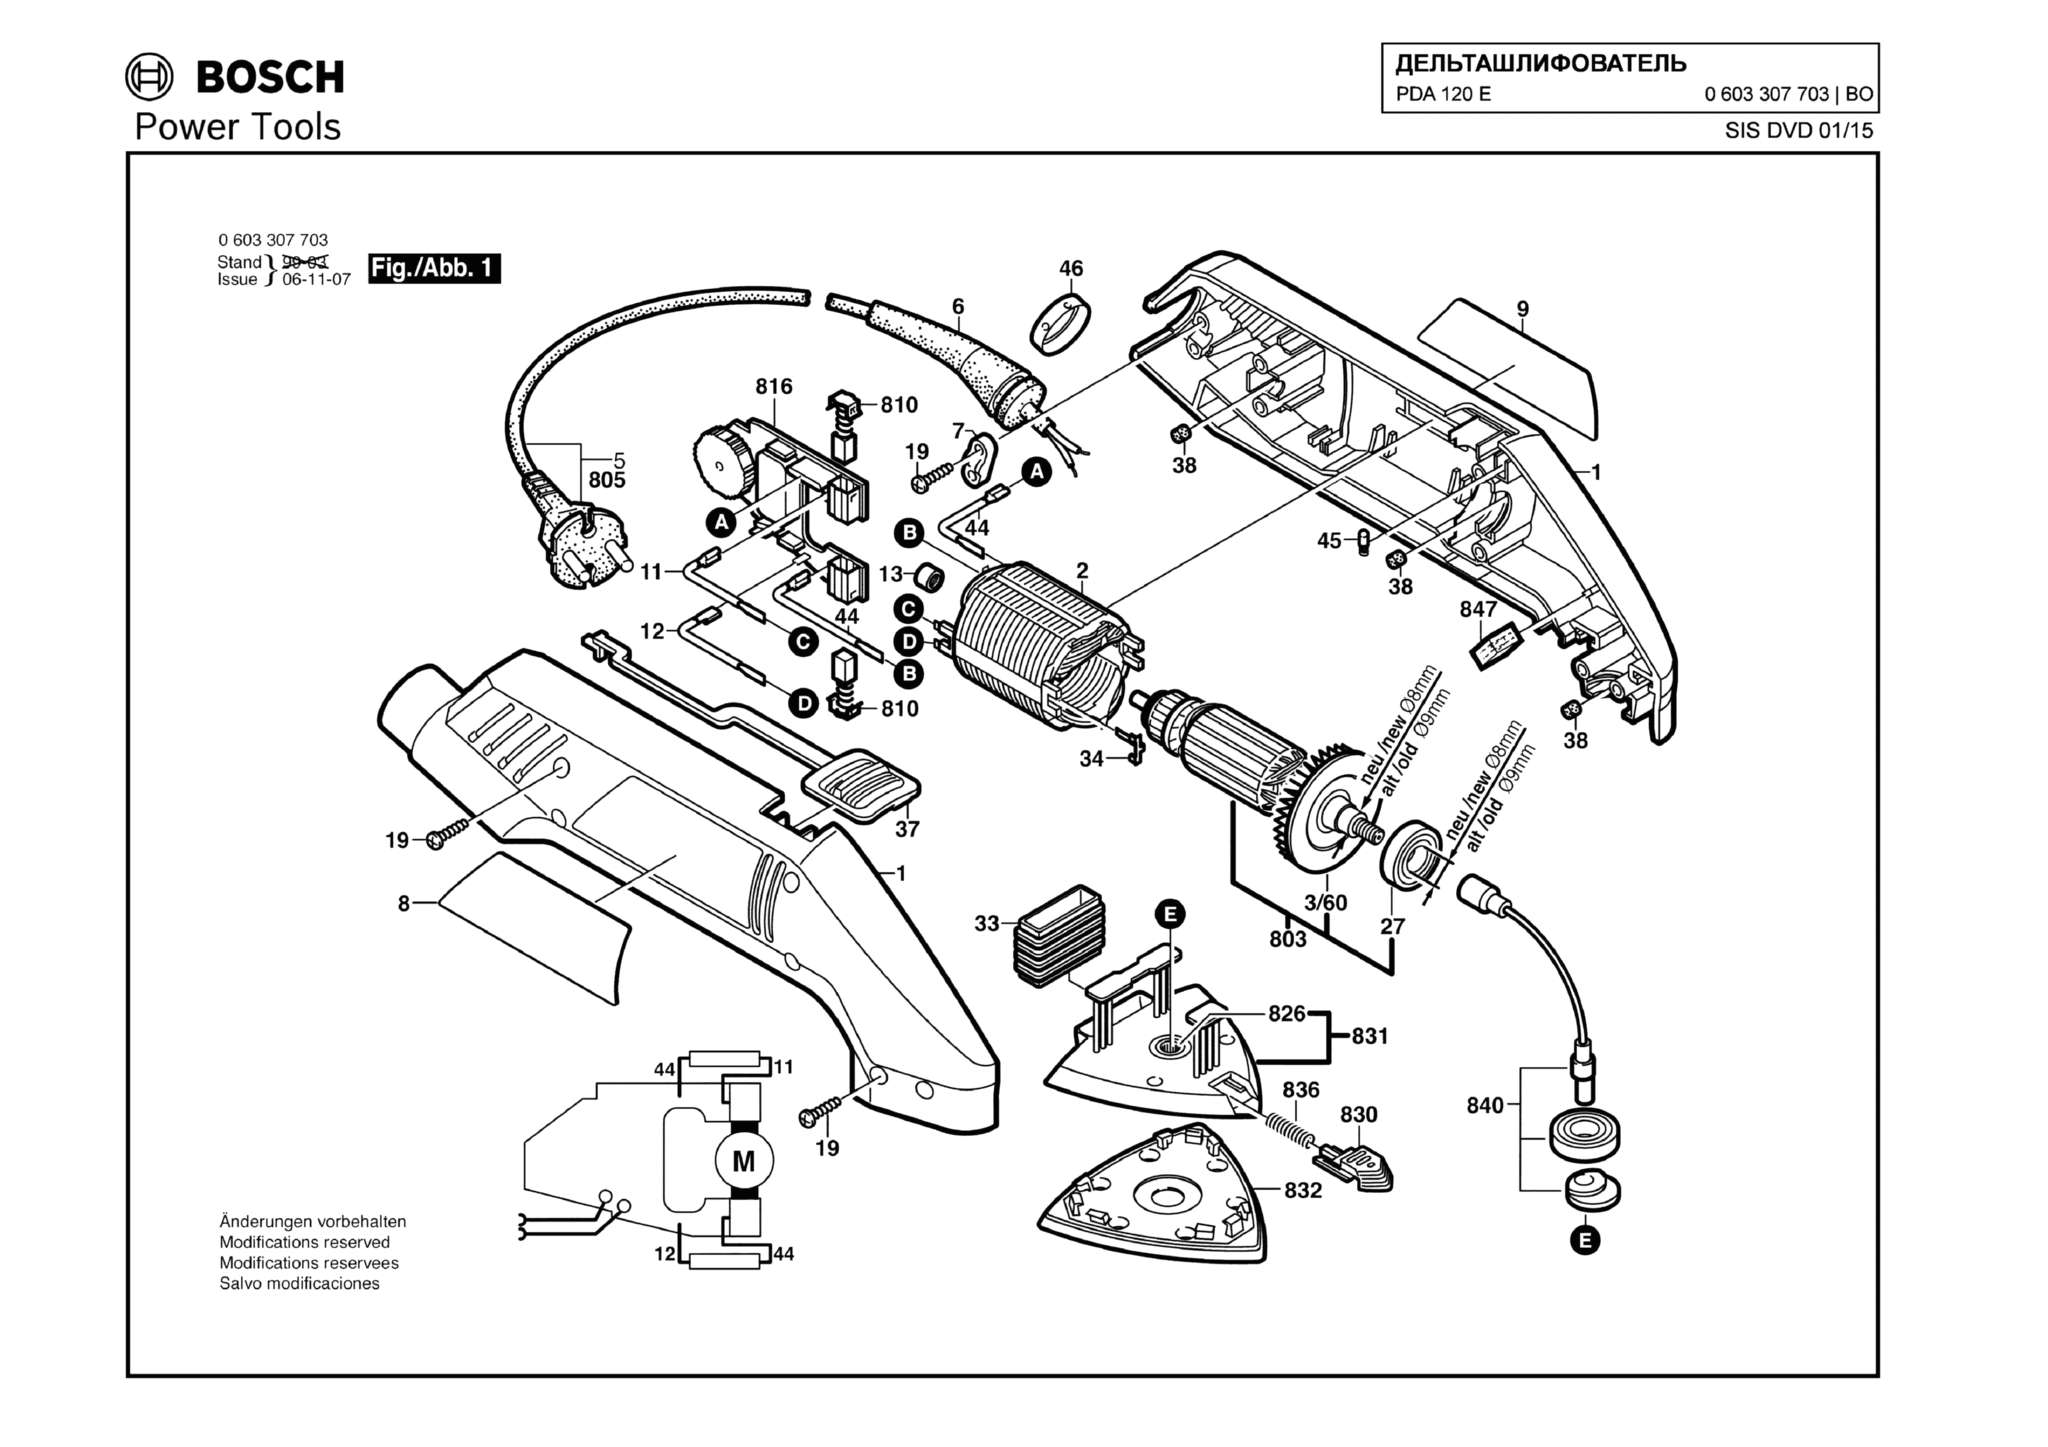 Запчасти, схема и деталировка Bosch PDA 120 E (ТИП 0603307703)